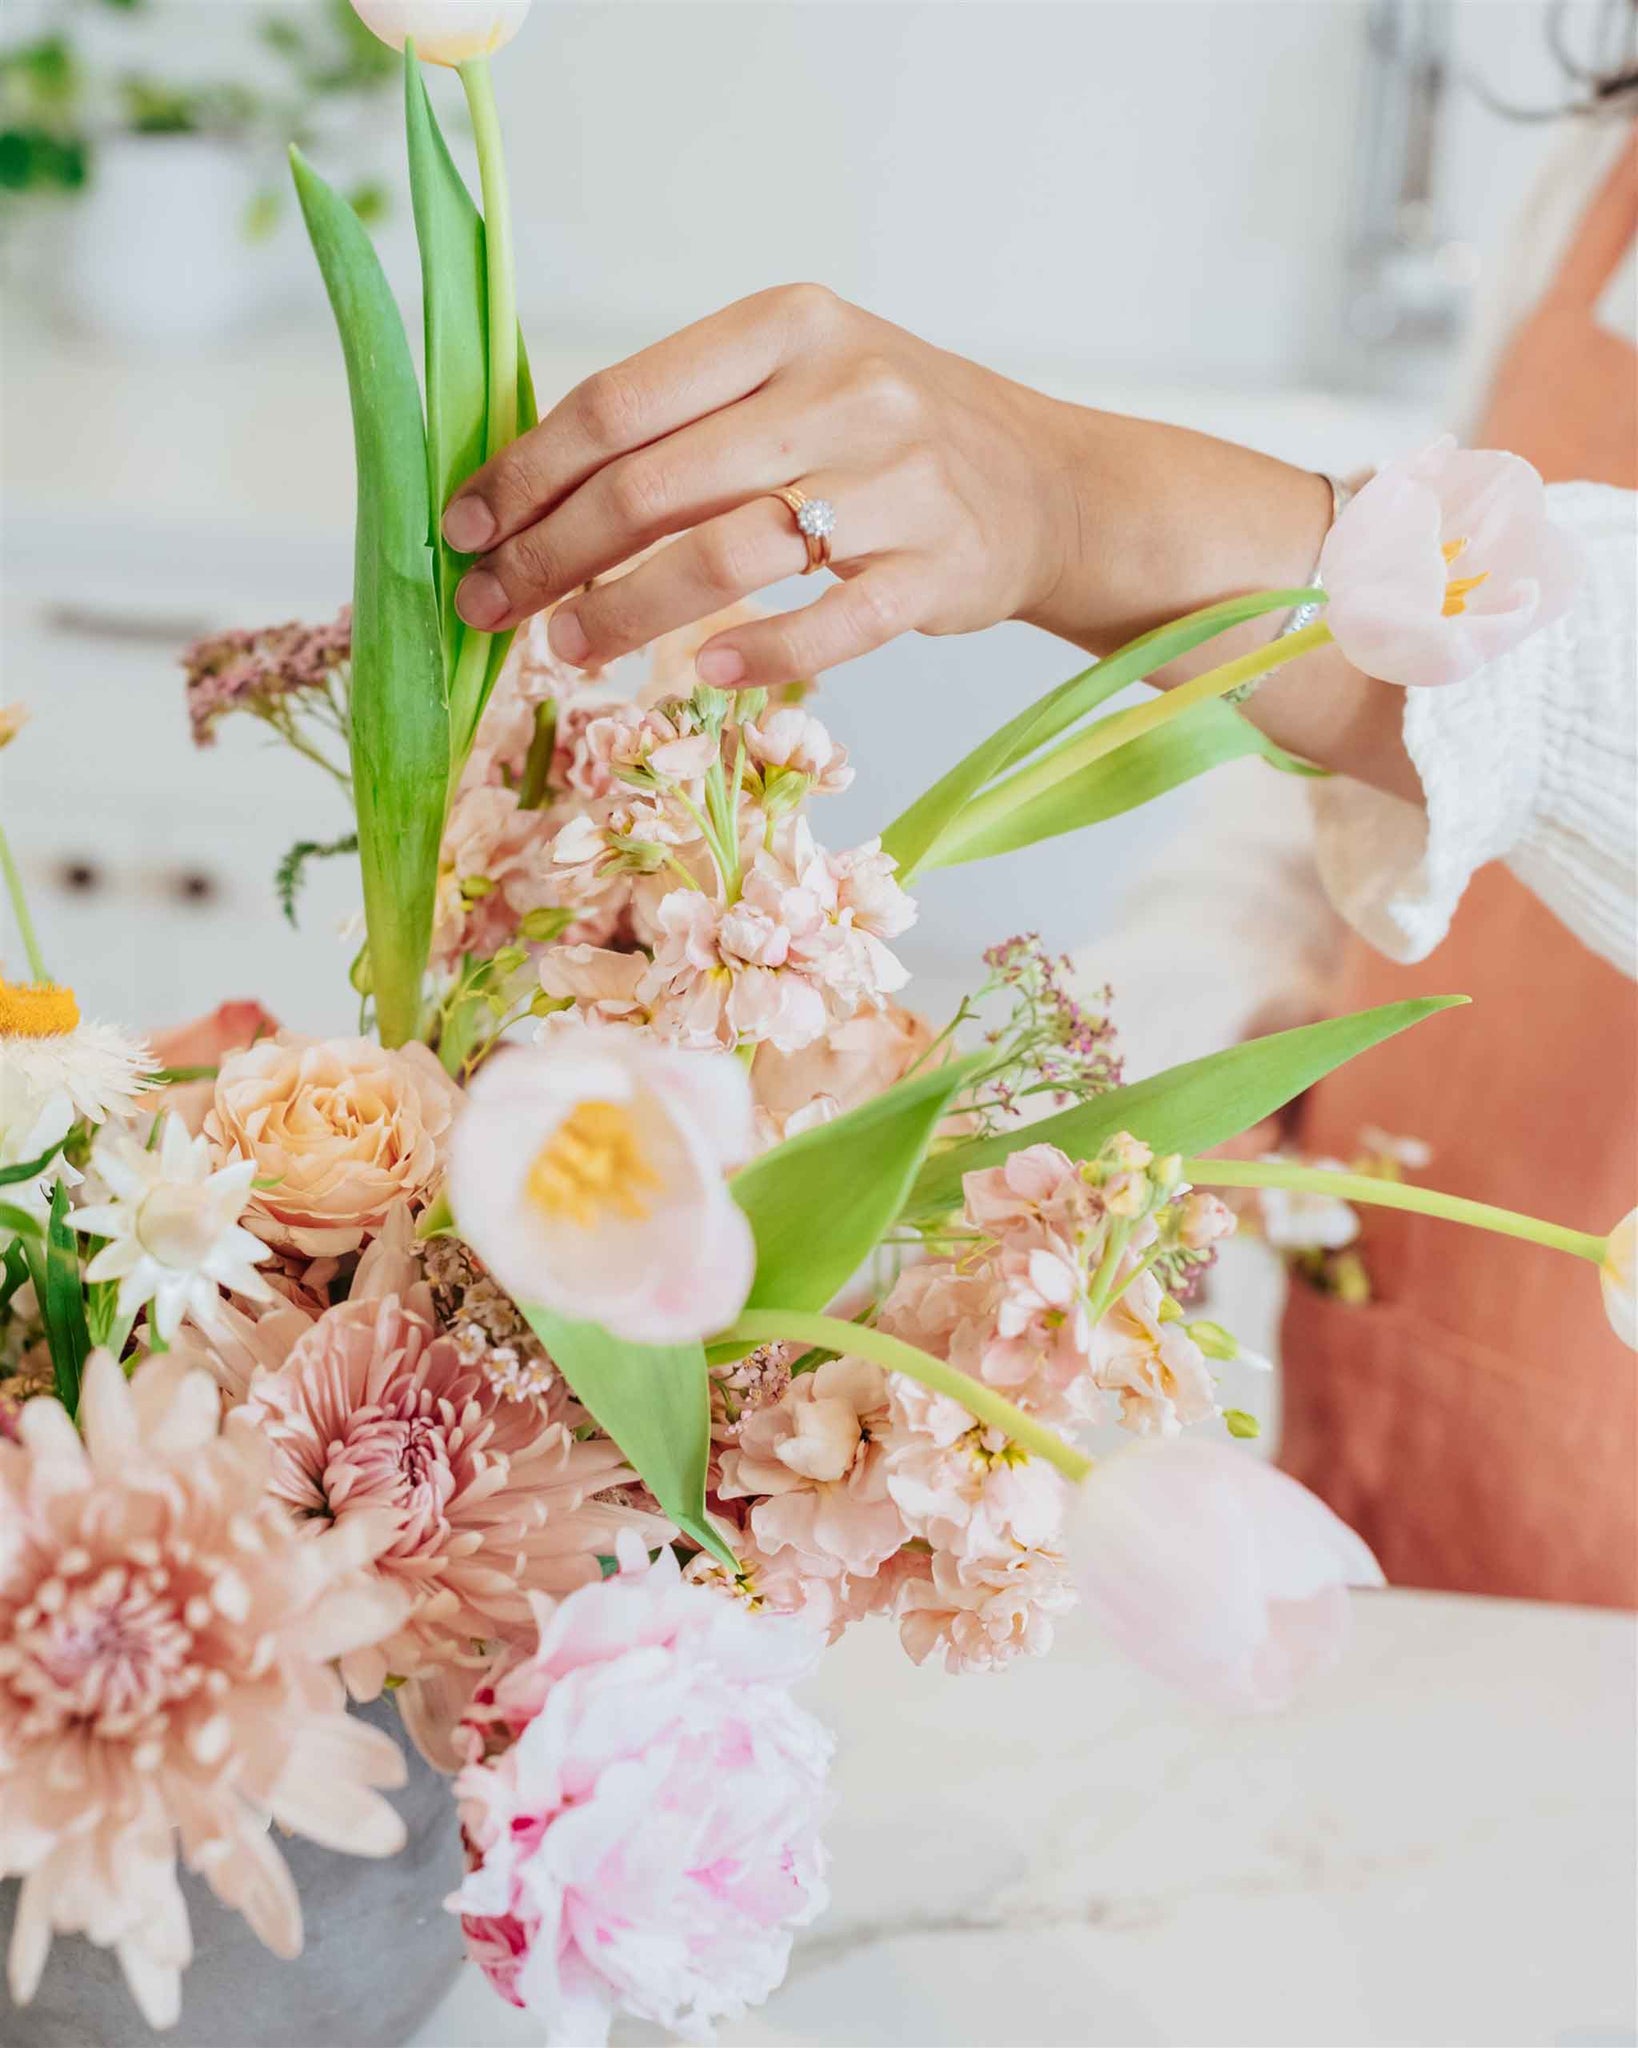 Woman's hand arranging beautiful flowers